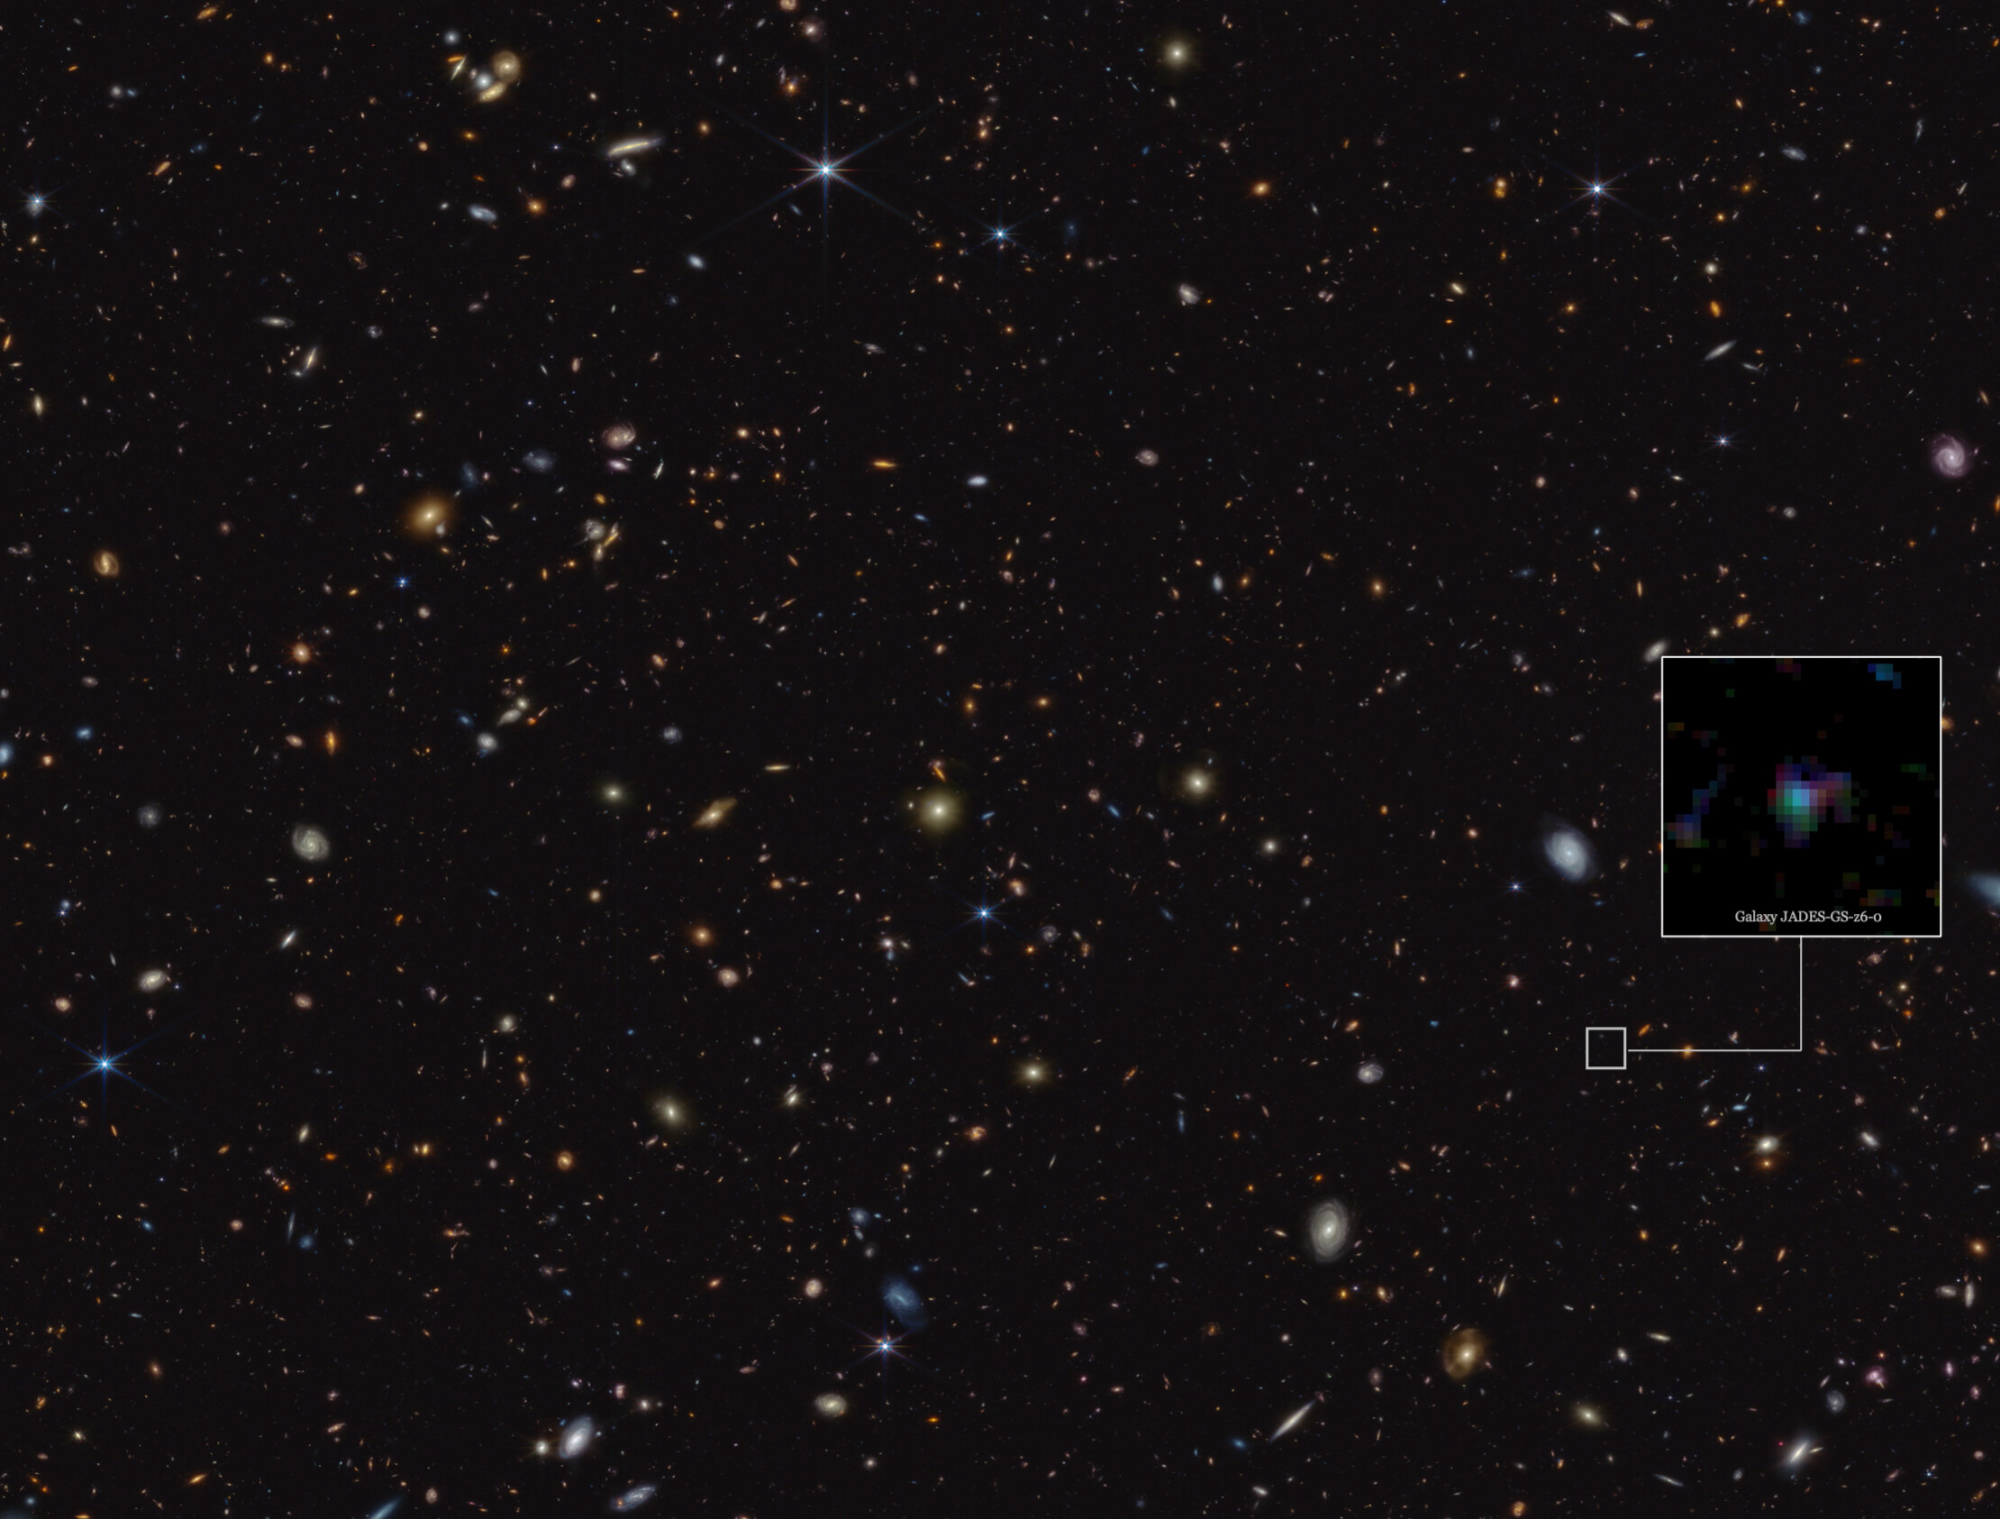 Galaxy_JADES-GS-z6_in_the_GOODS-S_field_JADES_NIRCam_image.jpg